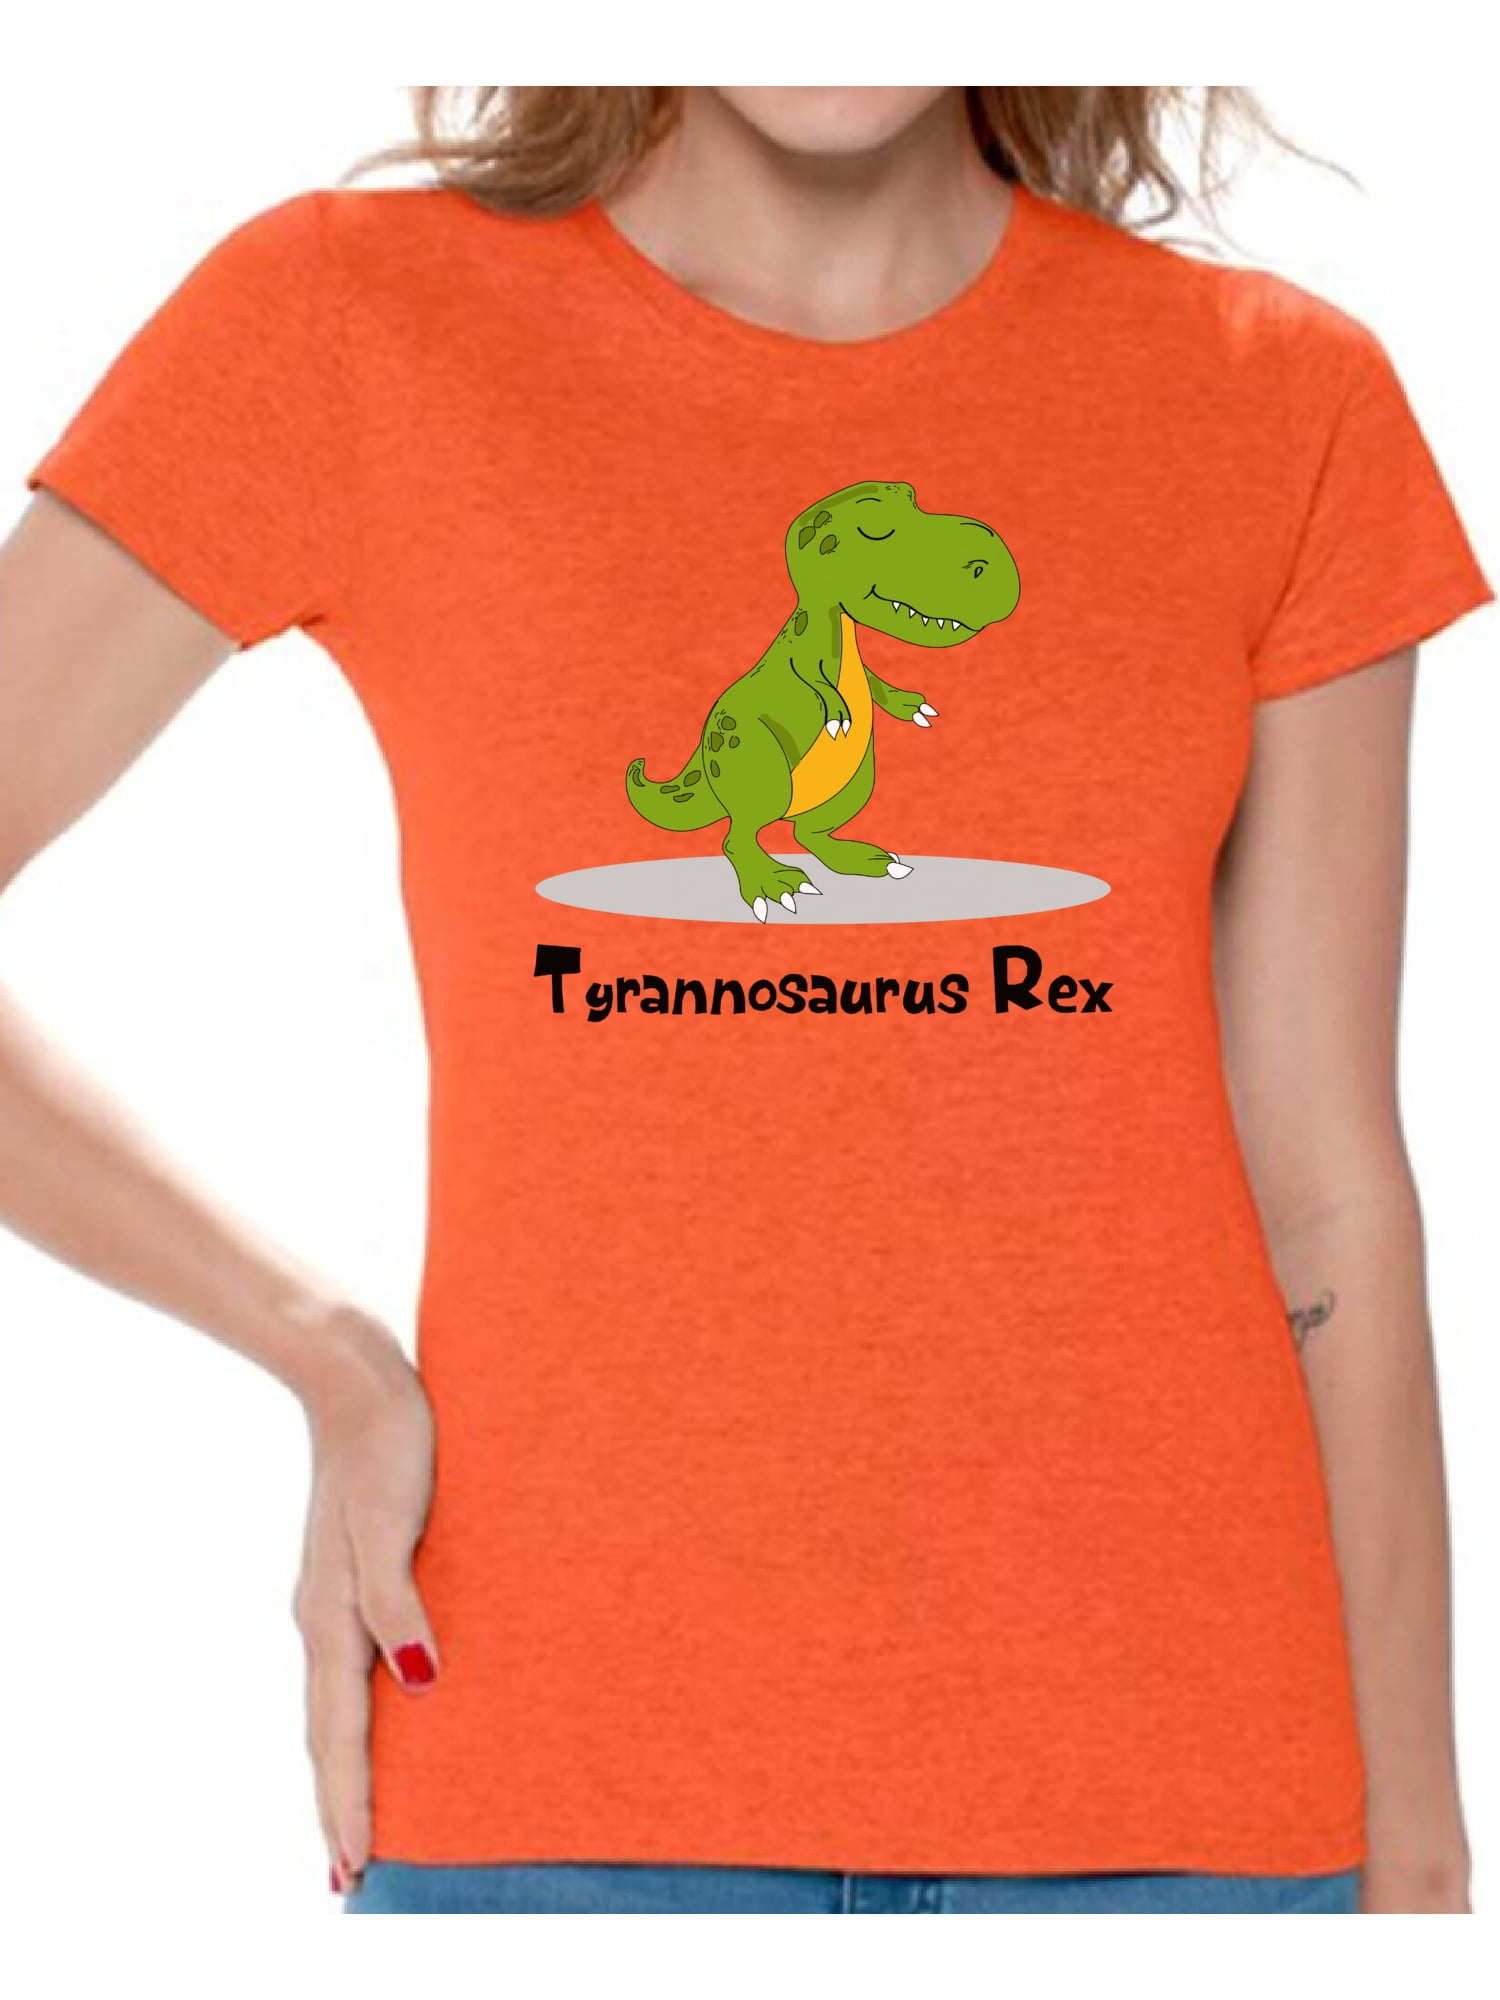 Tyrannosaurus Rex Dinosaur Tshirt for Women Dinosaur Gifts for Her.